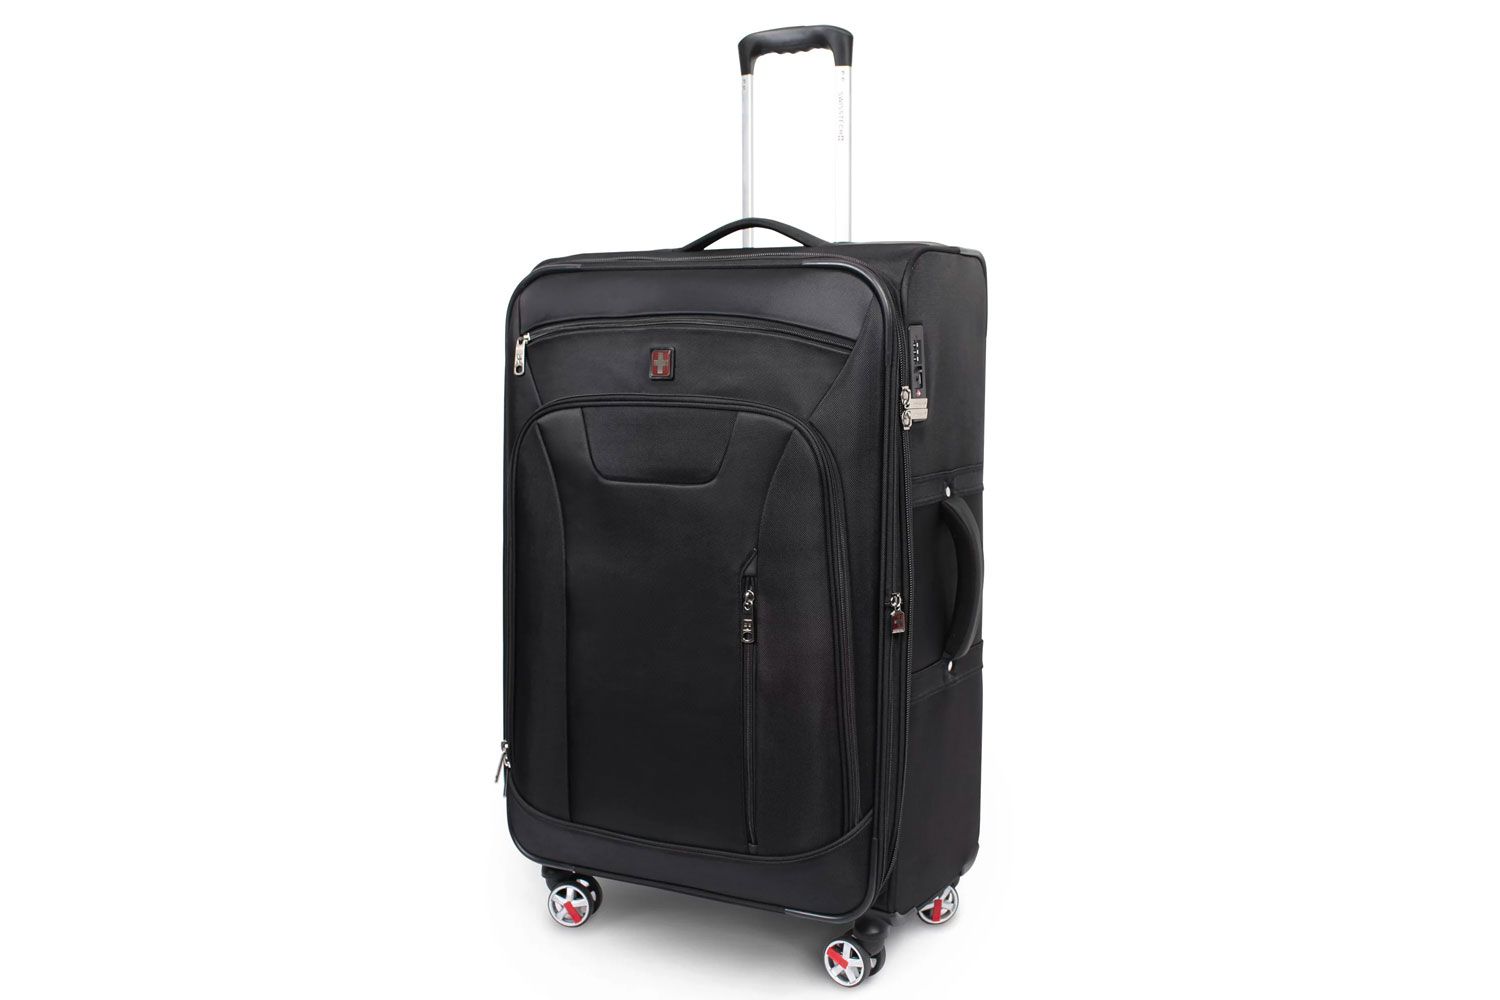 SwissTech Executive 29-inch Softside Luggage